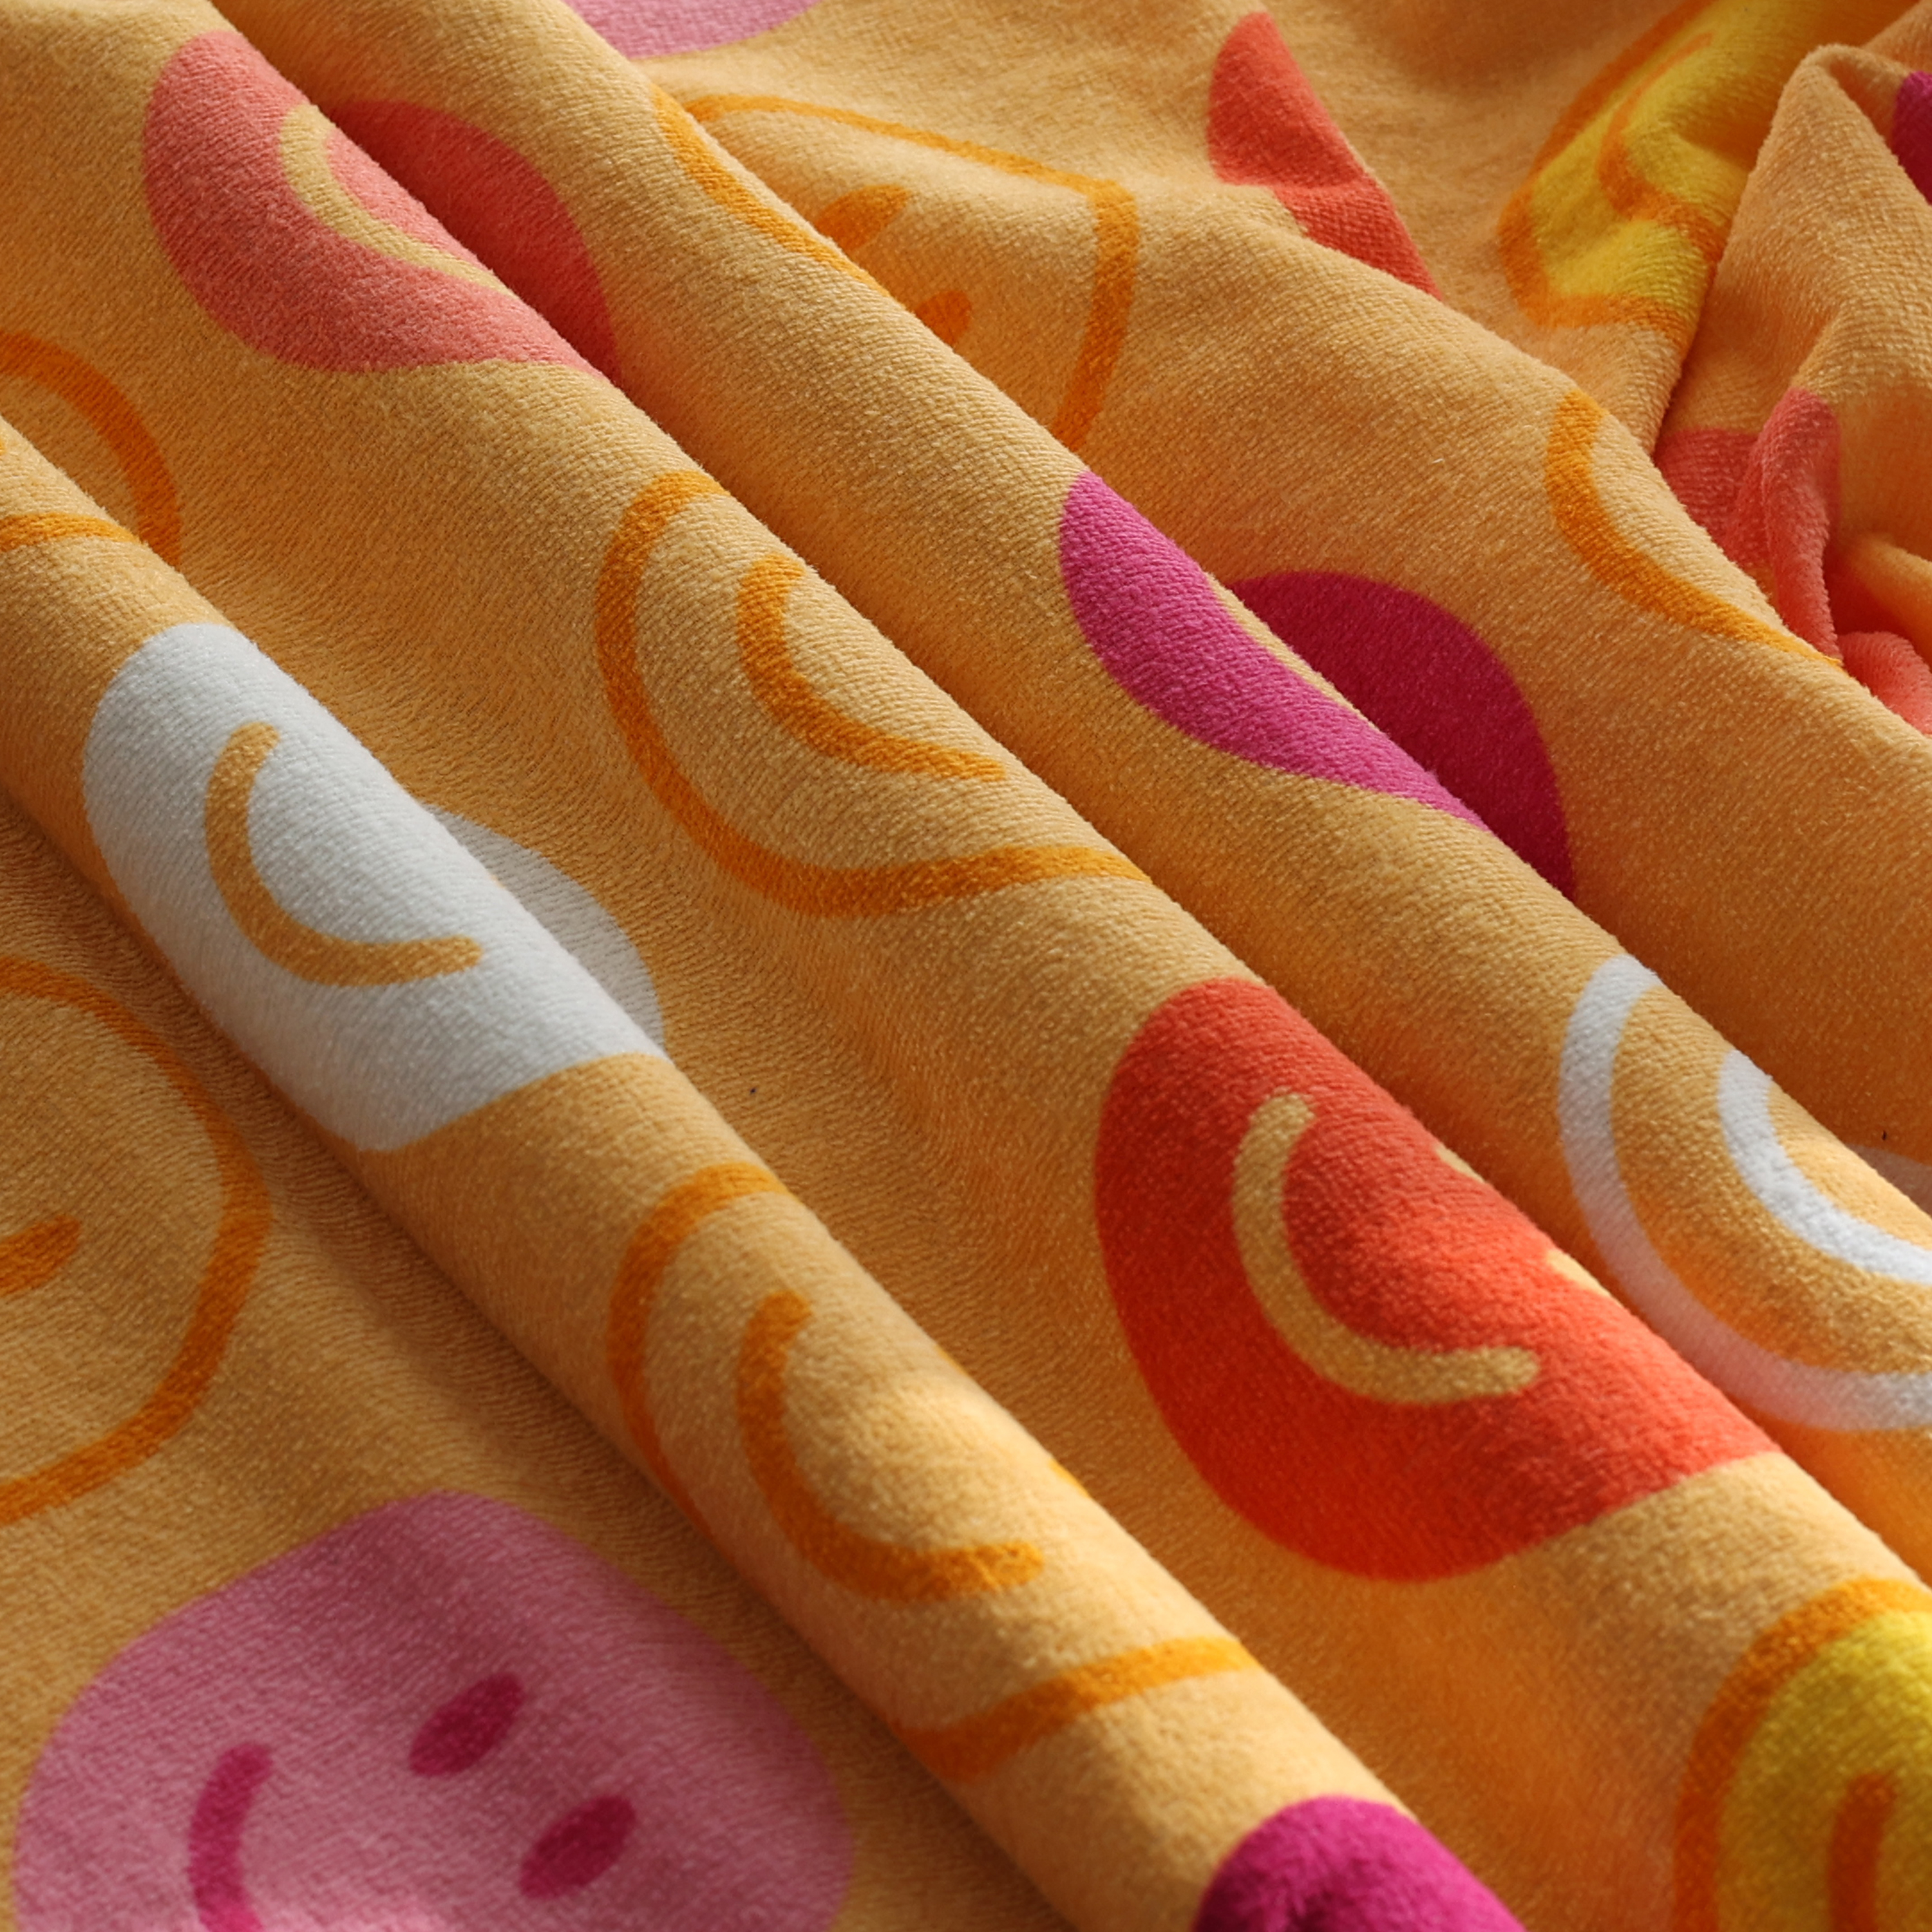 Mainstays Velour Beach Towel, Smiley, Orange, 28x60 - image 4 of 5